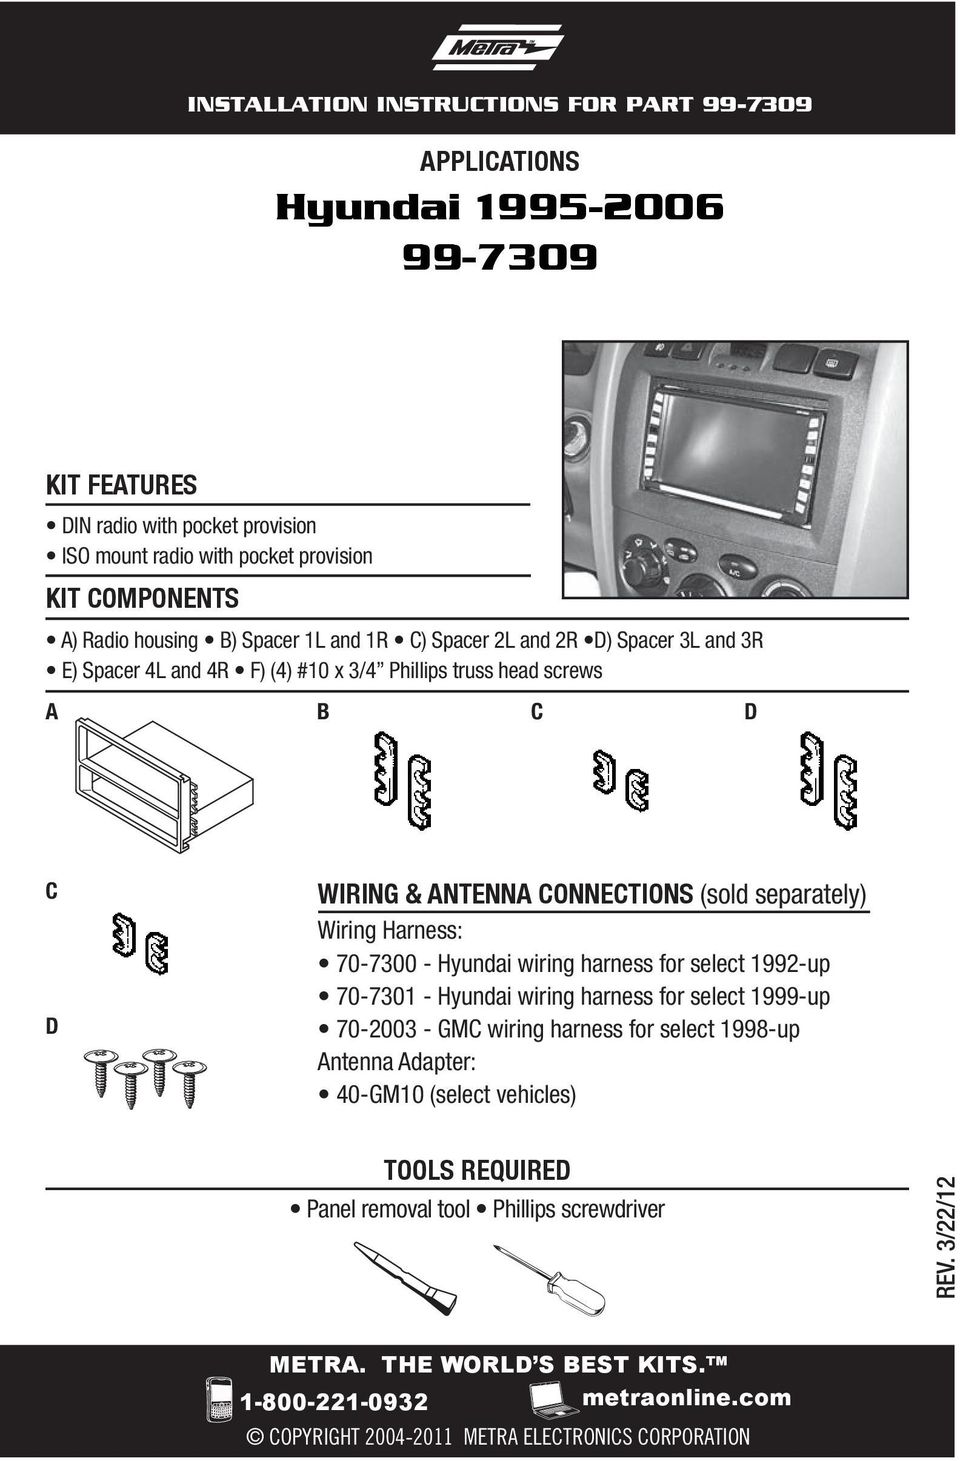 Wiring Harness: 70-7300 - Hyundai wiring harness for select 1992-up 70-7301 - Hyundai wiring harness for select 1999-up 70-2003 - GMC wiring harness for select 1998-up Antenna Adapter: 40-GM10